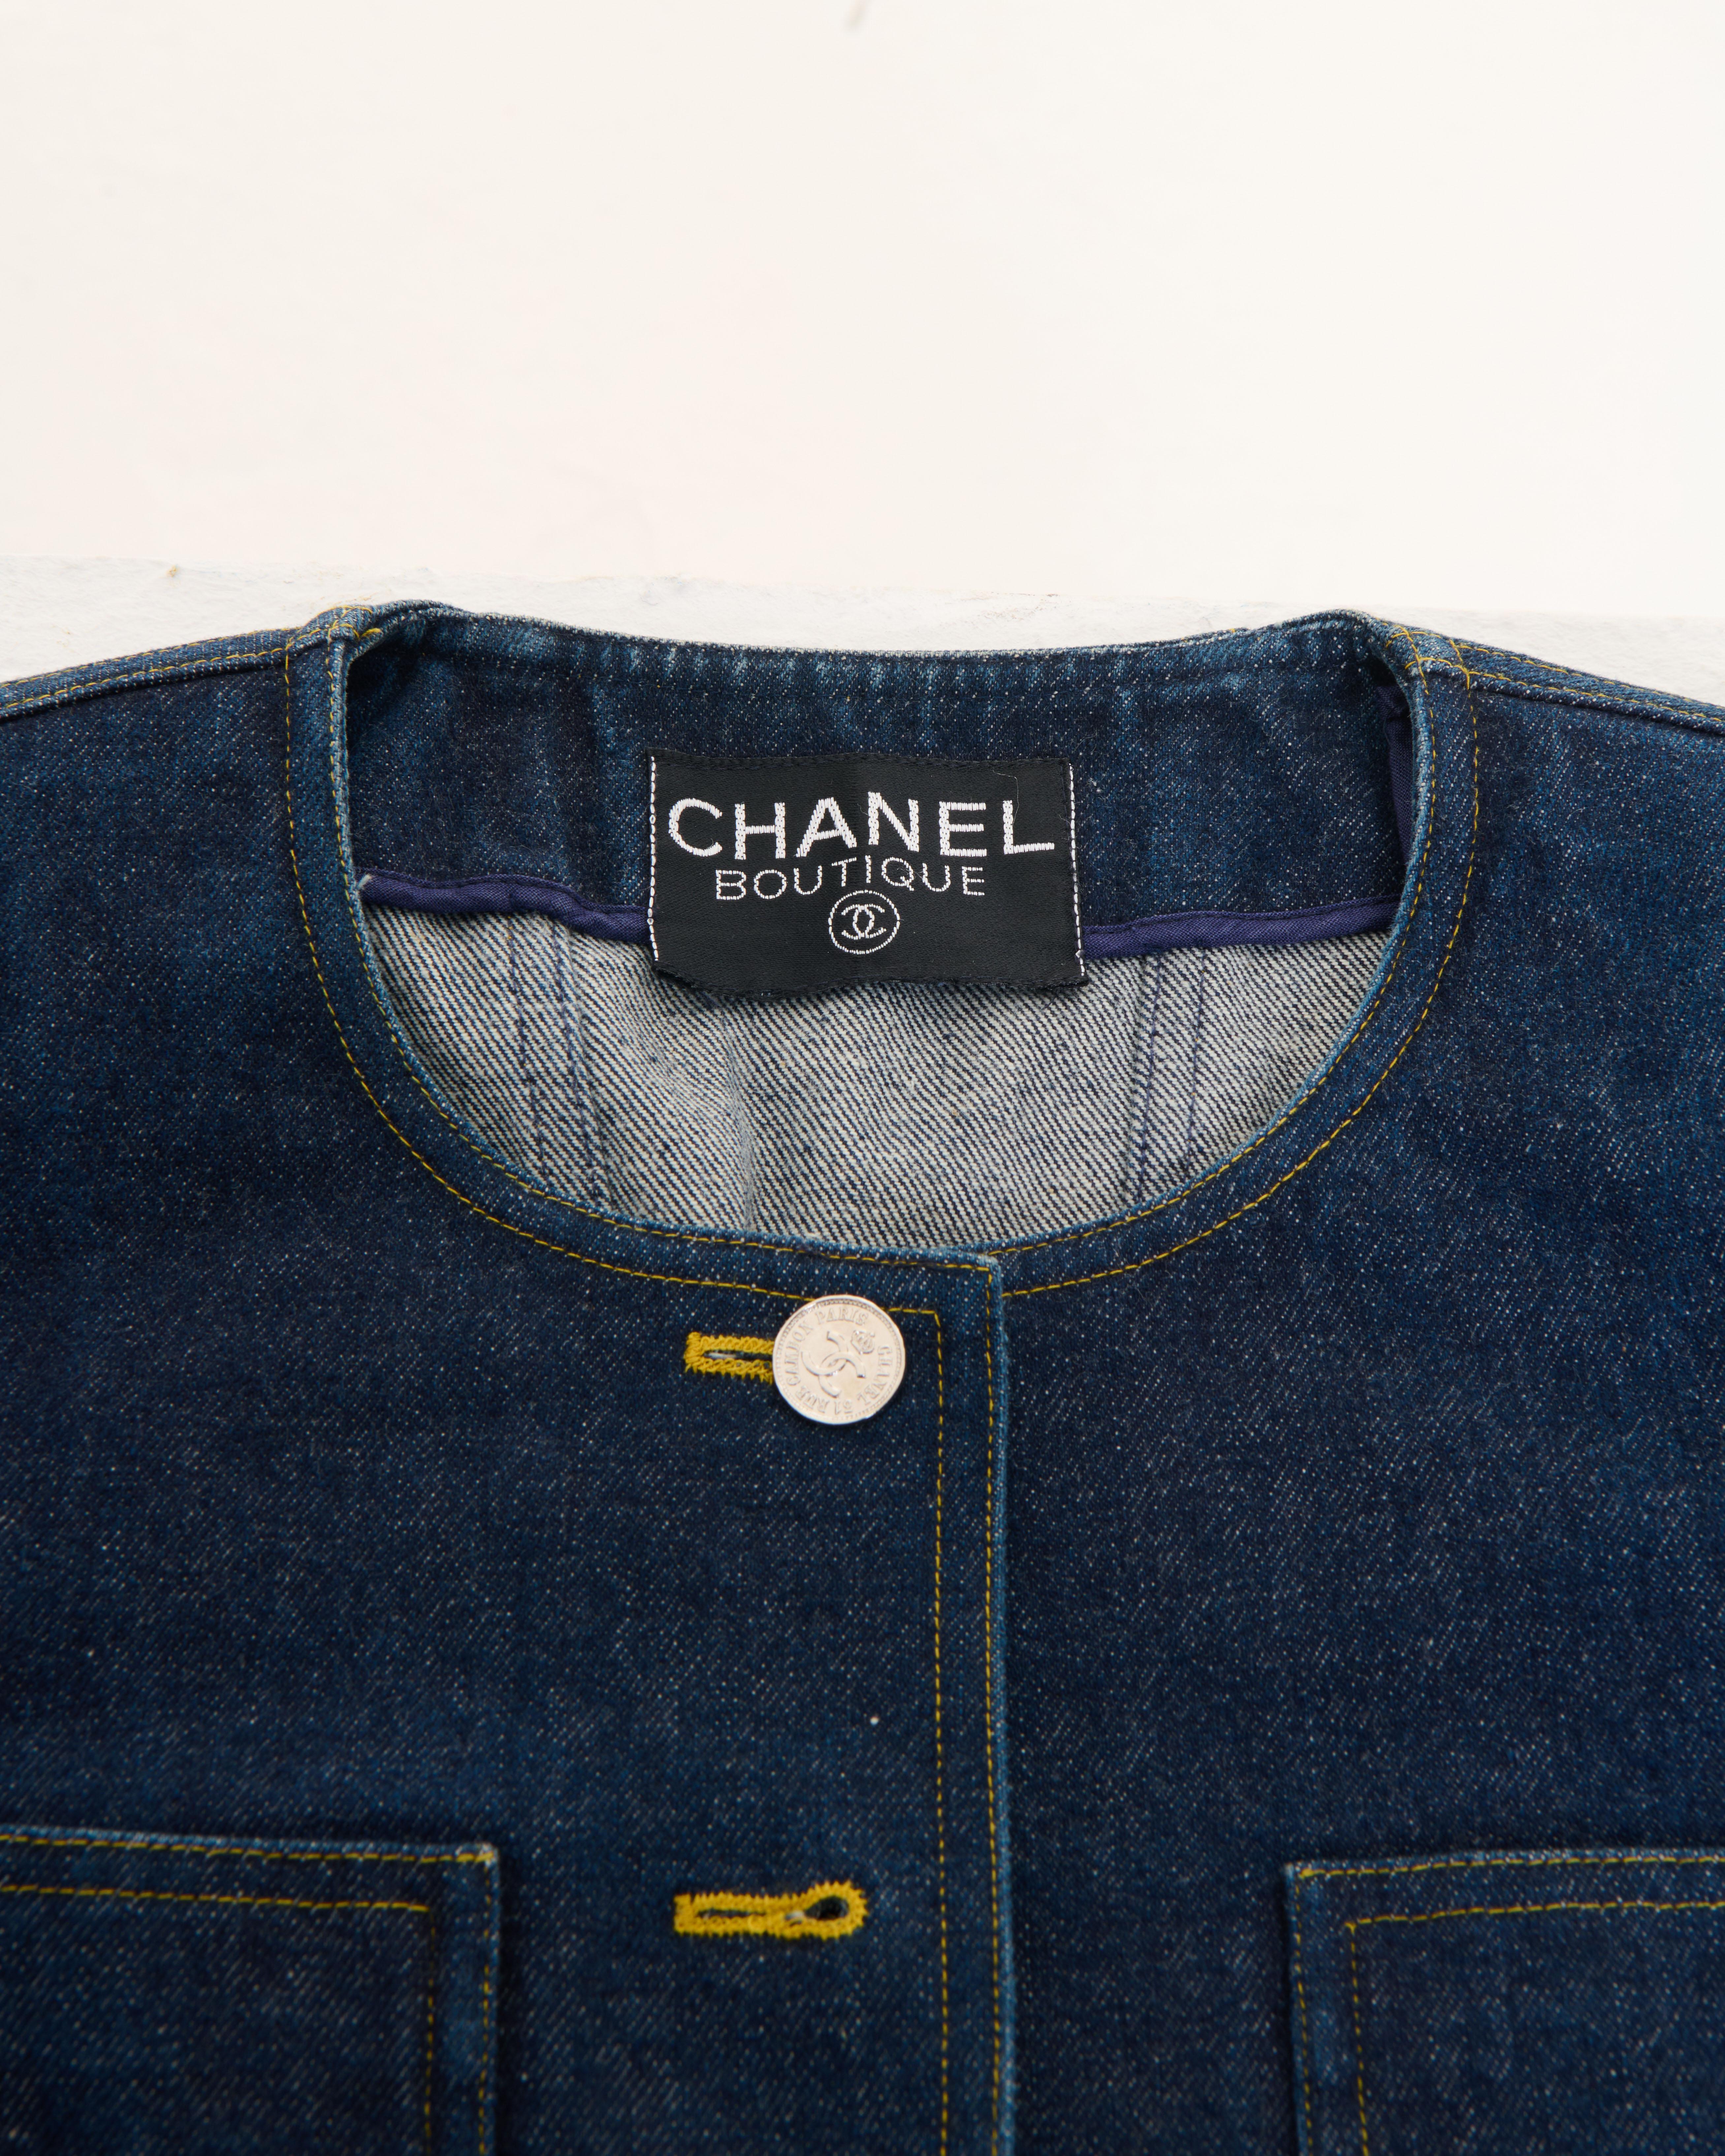 Chanel by Karl Lagerfeld S/S 1996 Blue denim indigo jacket and mini skirt set For Sale 9